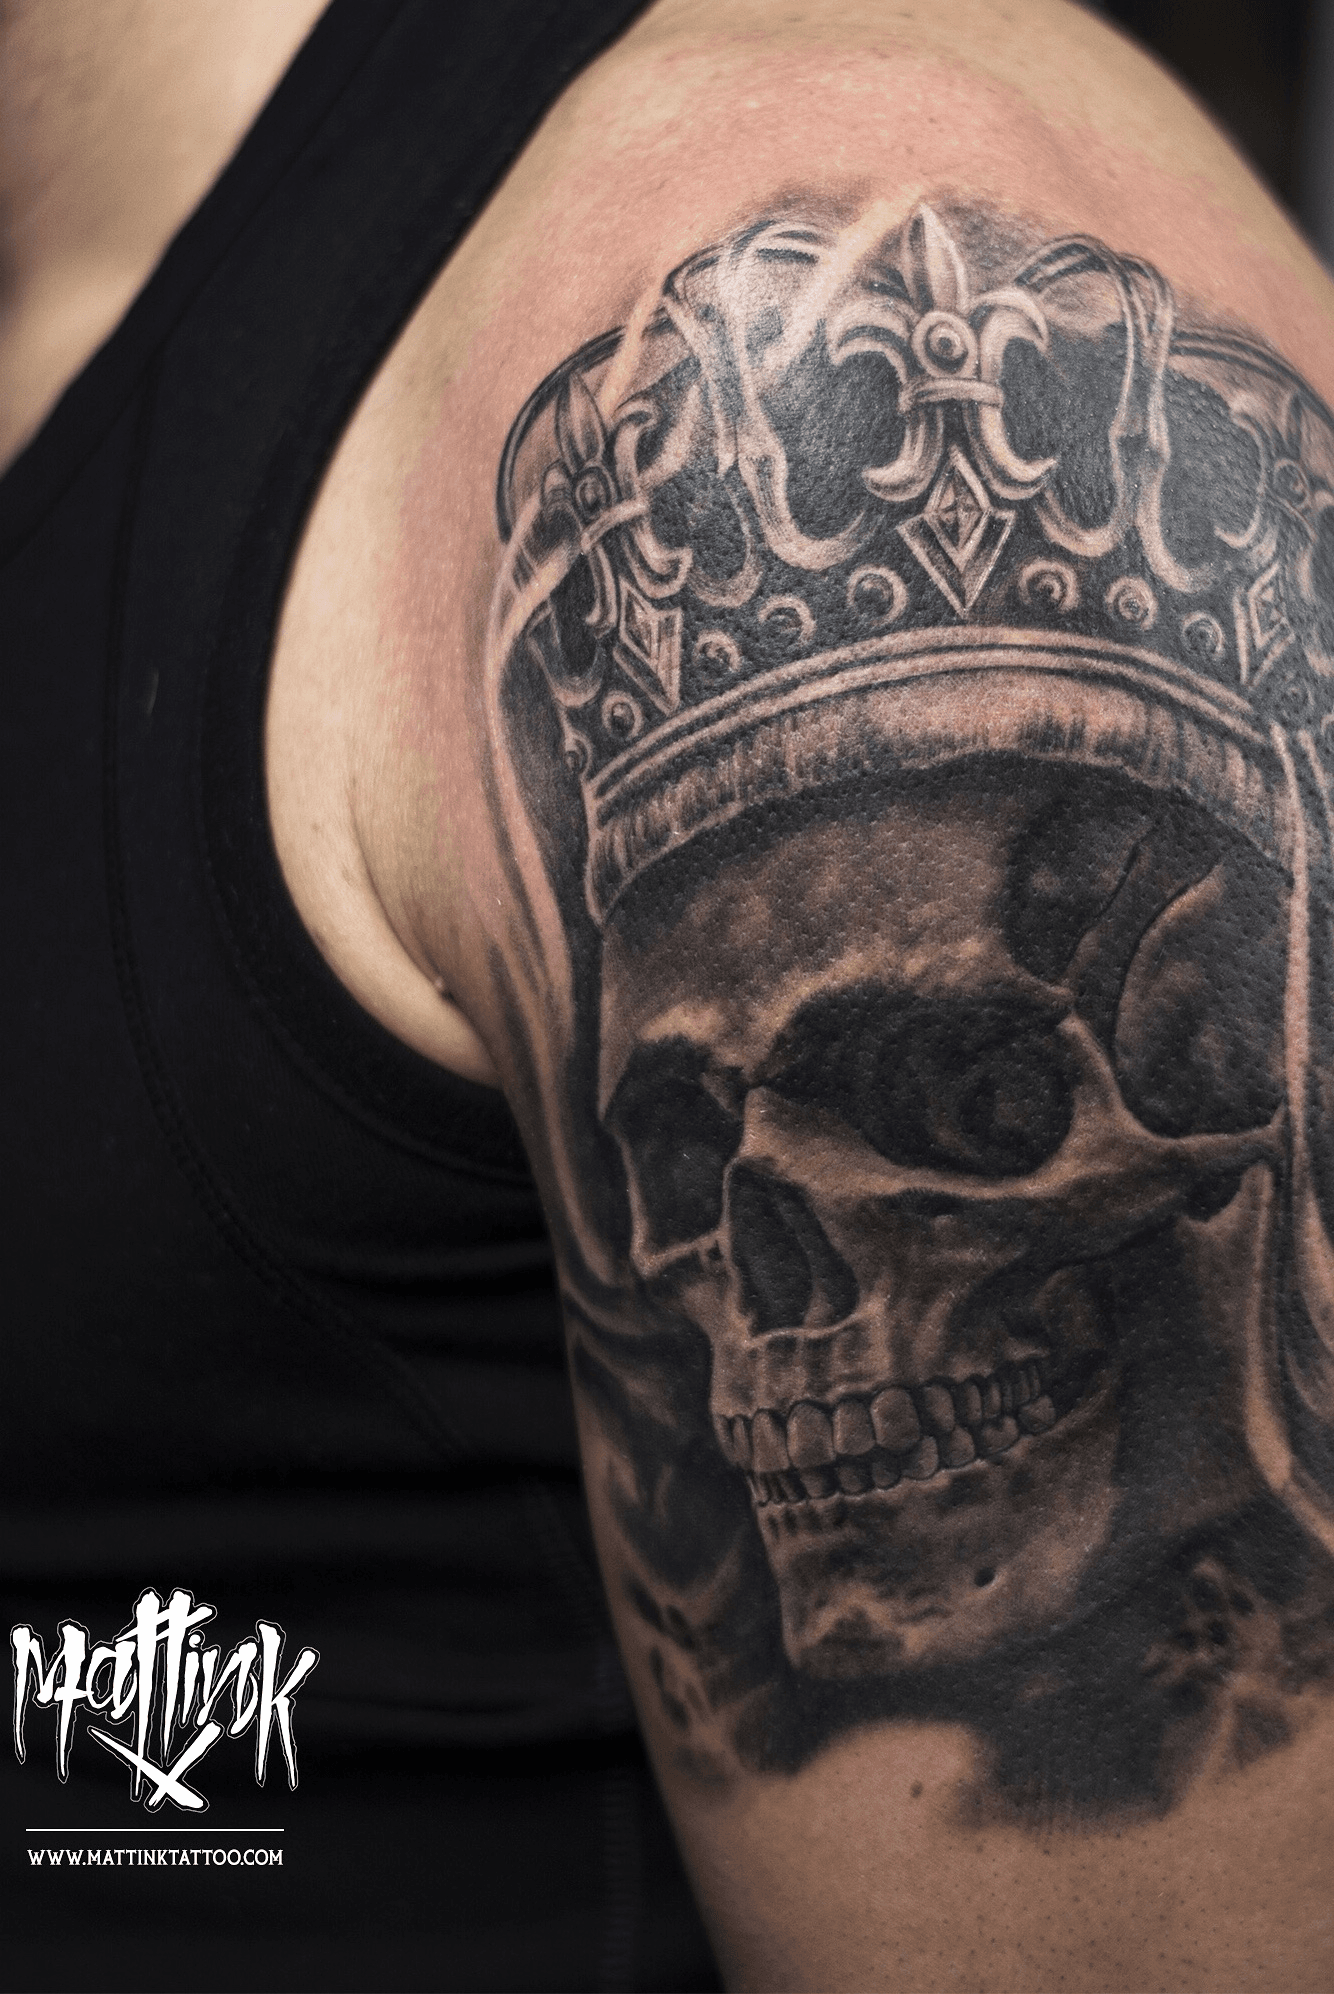 Hand Drawn Sketch Skull Crown Tattoo Stock Vector Royalty Free 275477435   Shutterstock